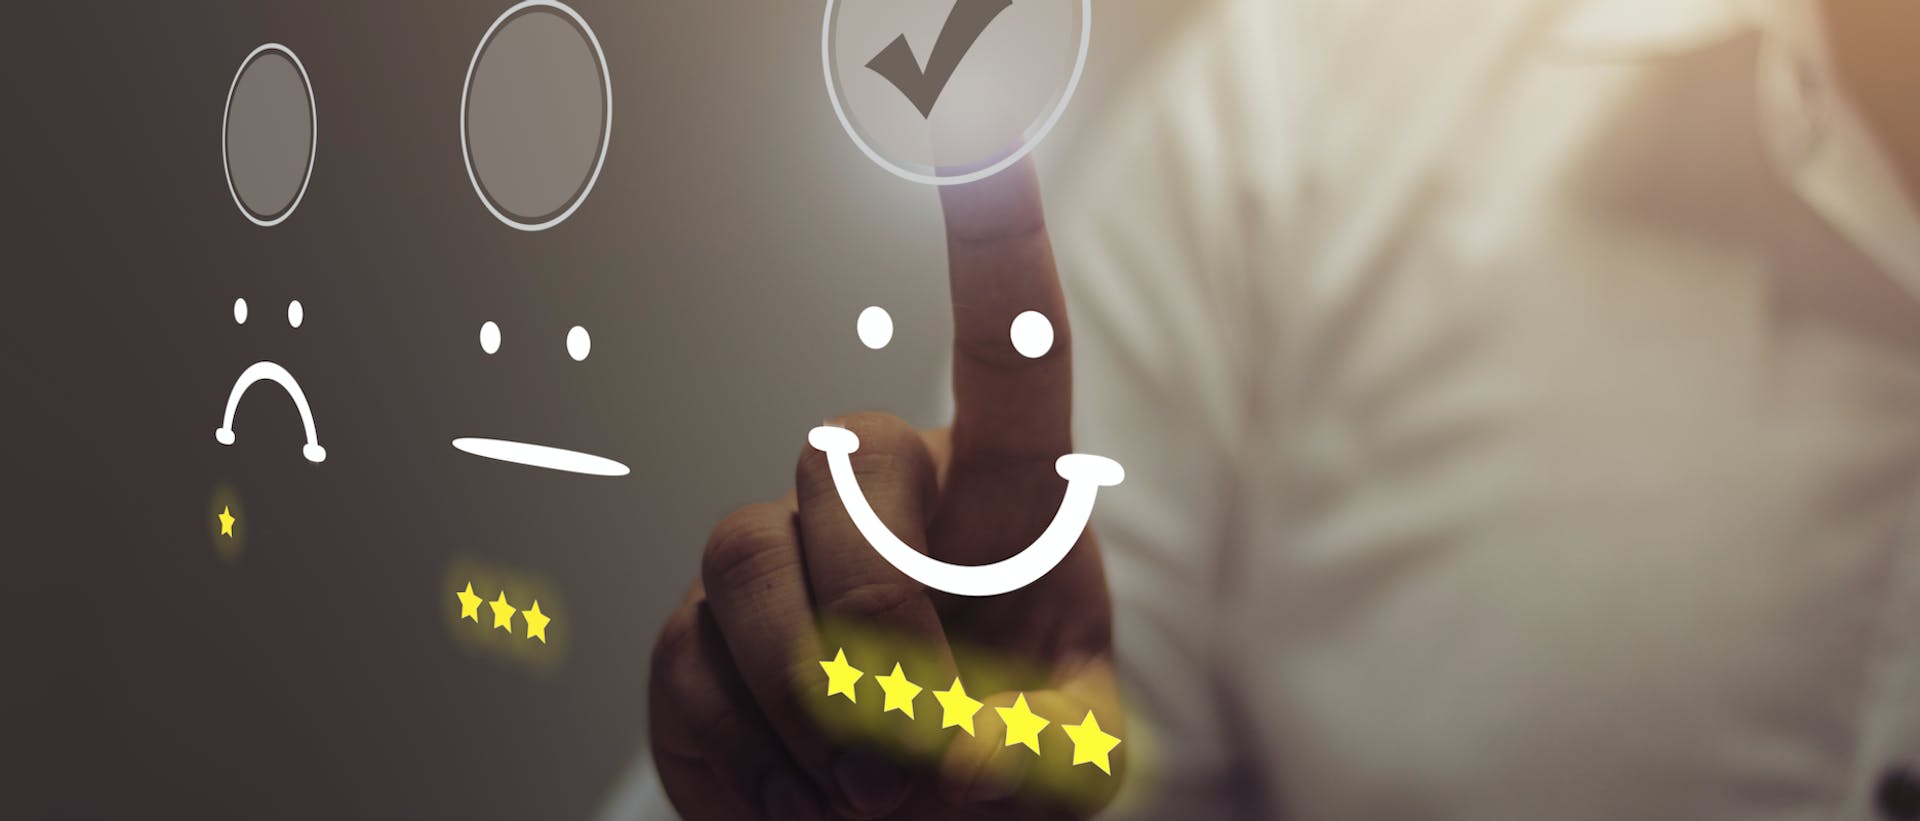 reputation management five star customer score 